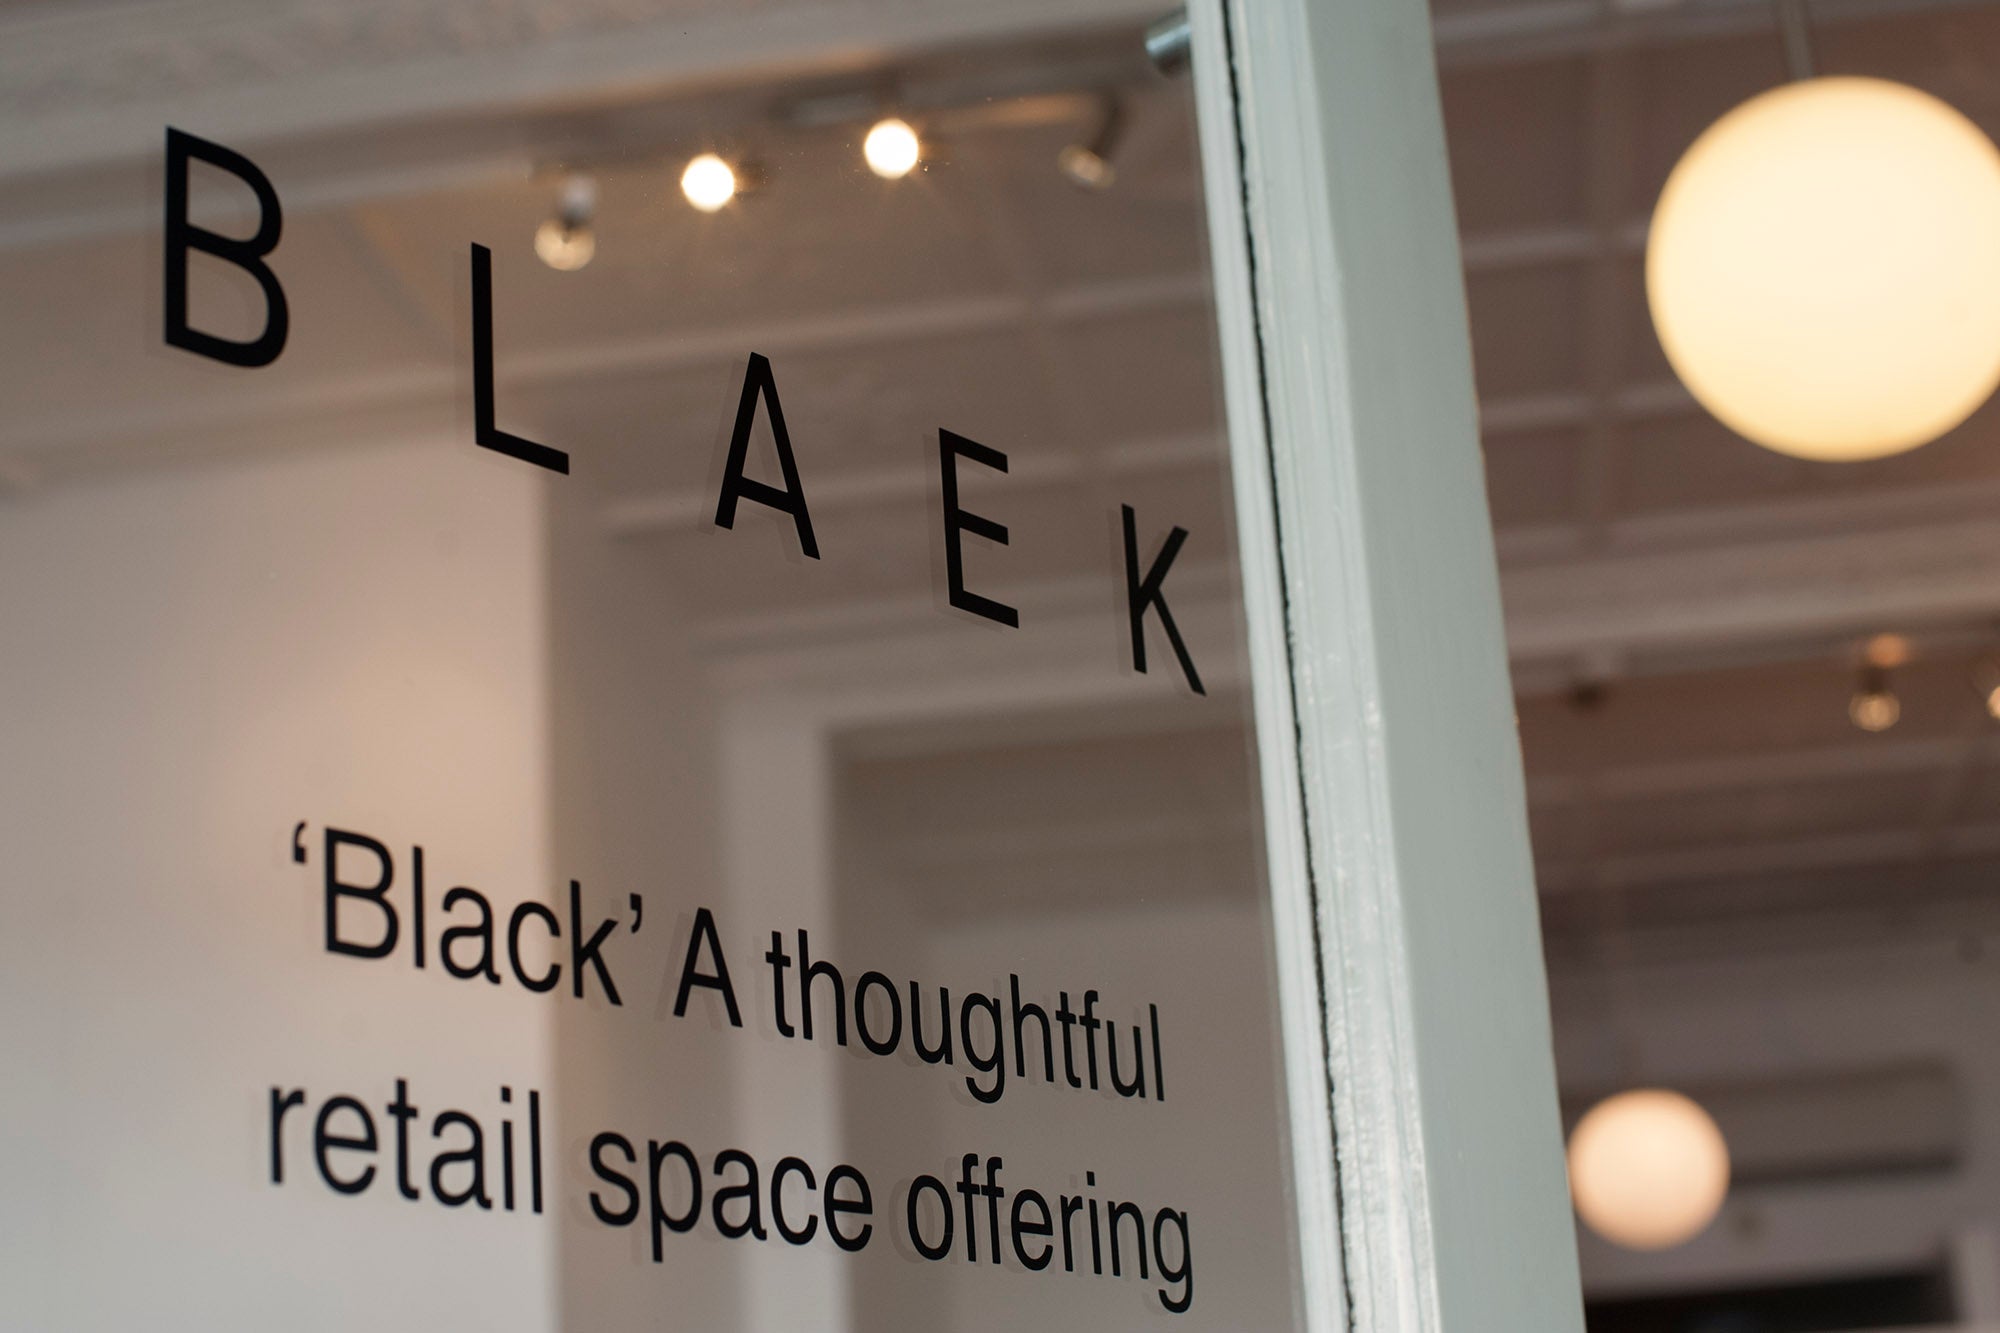 BLAEK Store